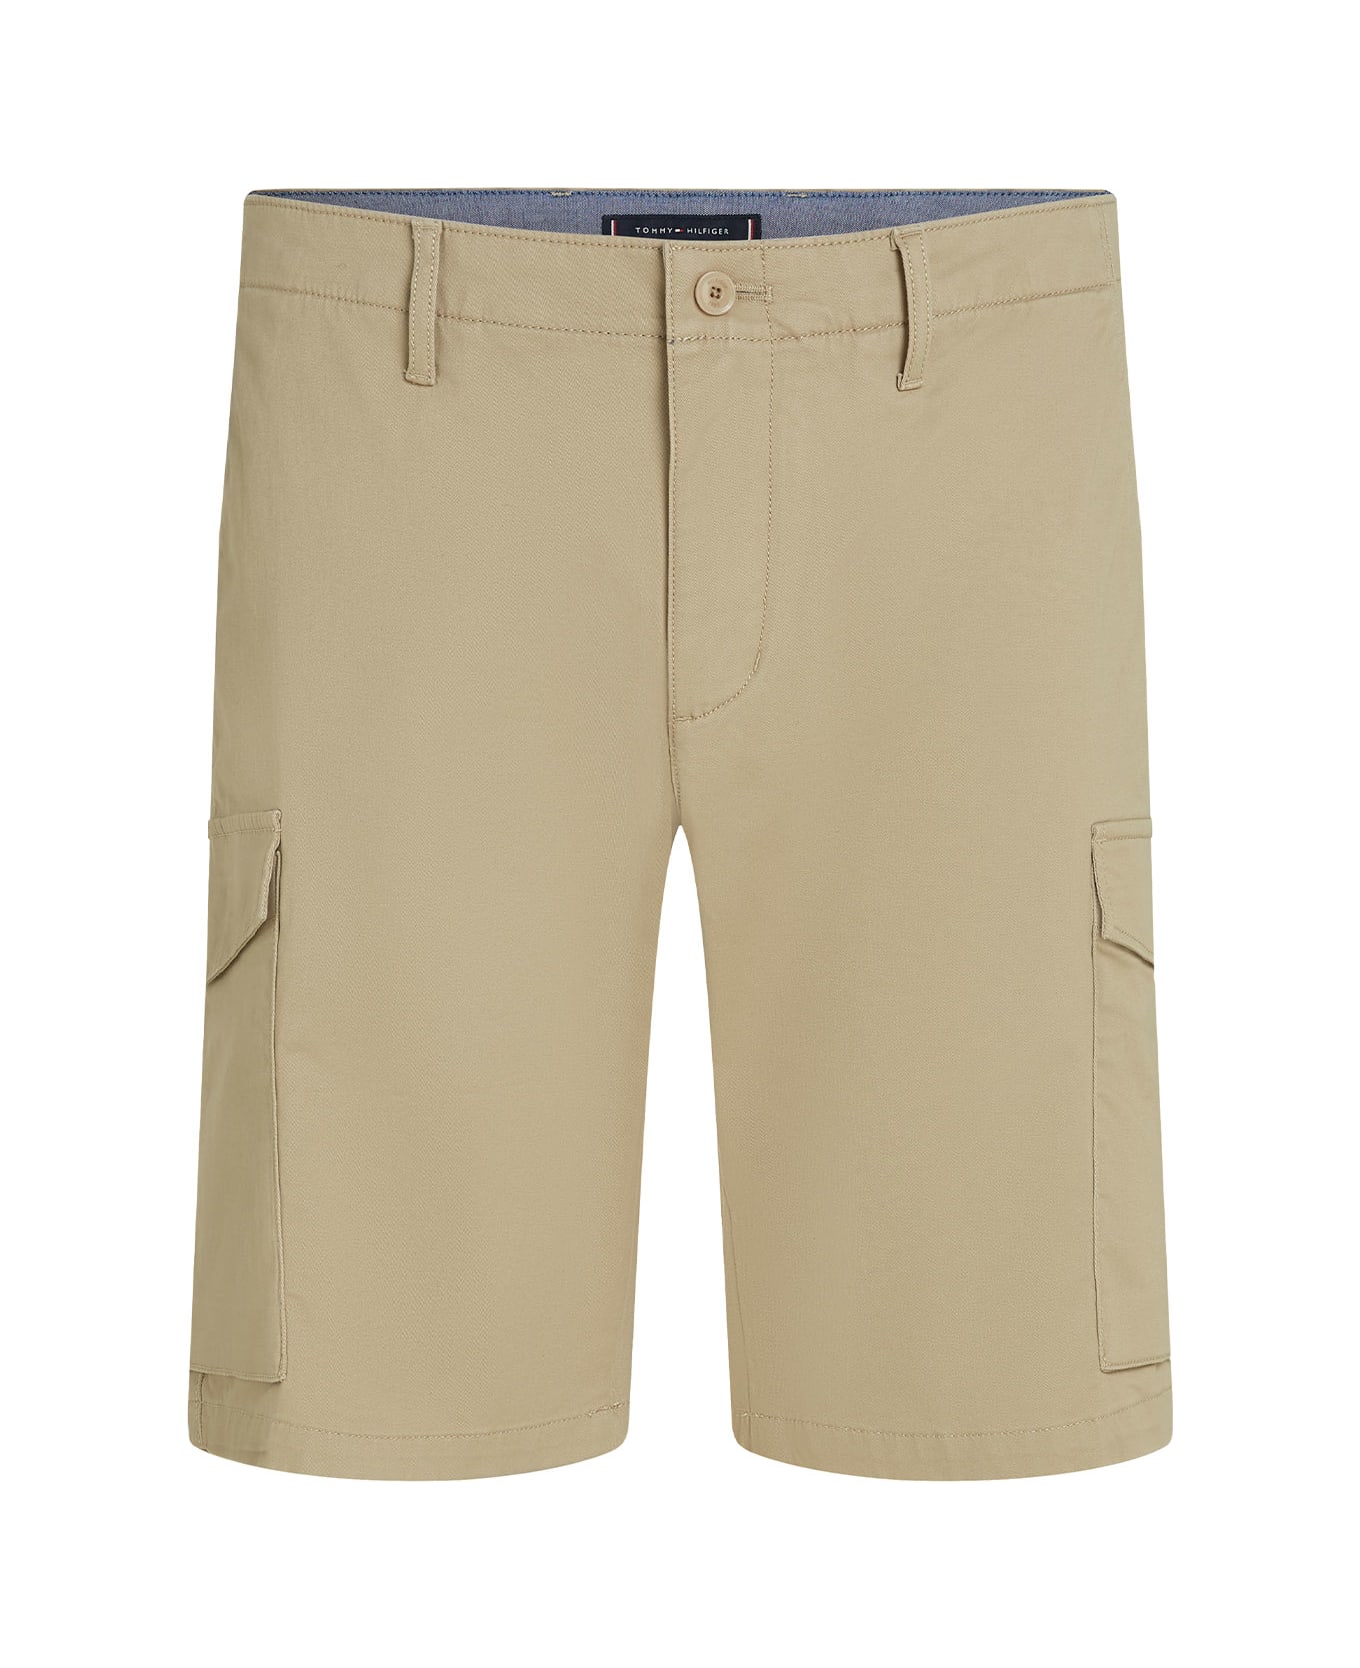 Tommy Hilfiger Khaki Men's Bermuda Shorts With Pockets - BATIQUE KHAKI ショートパンツ